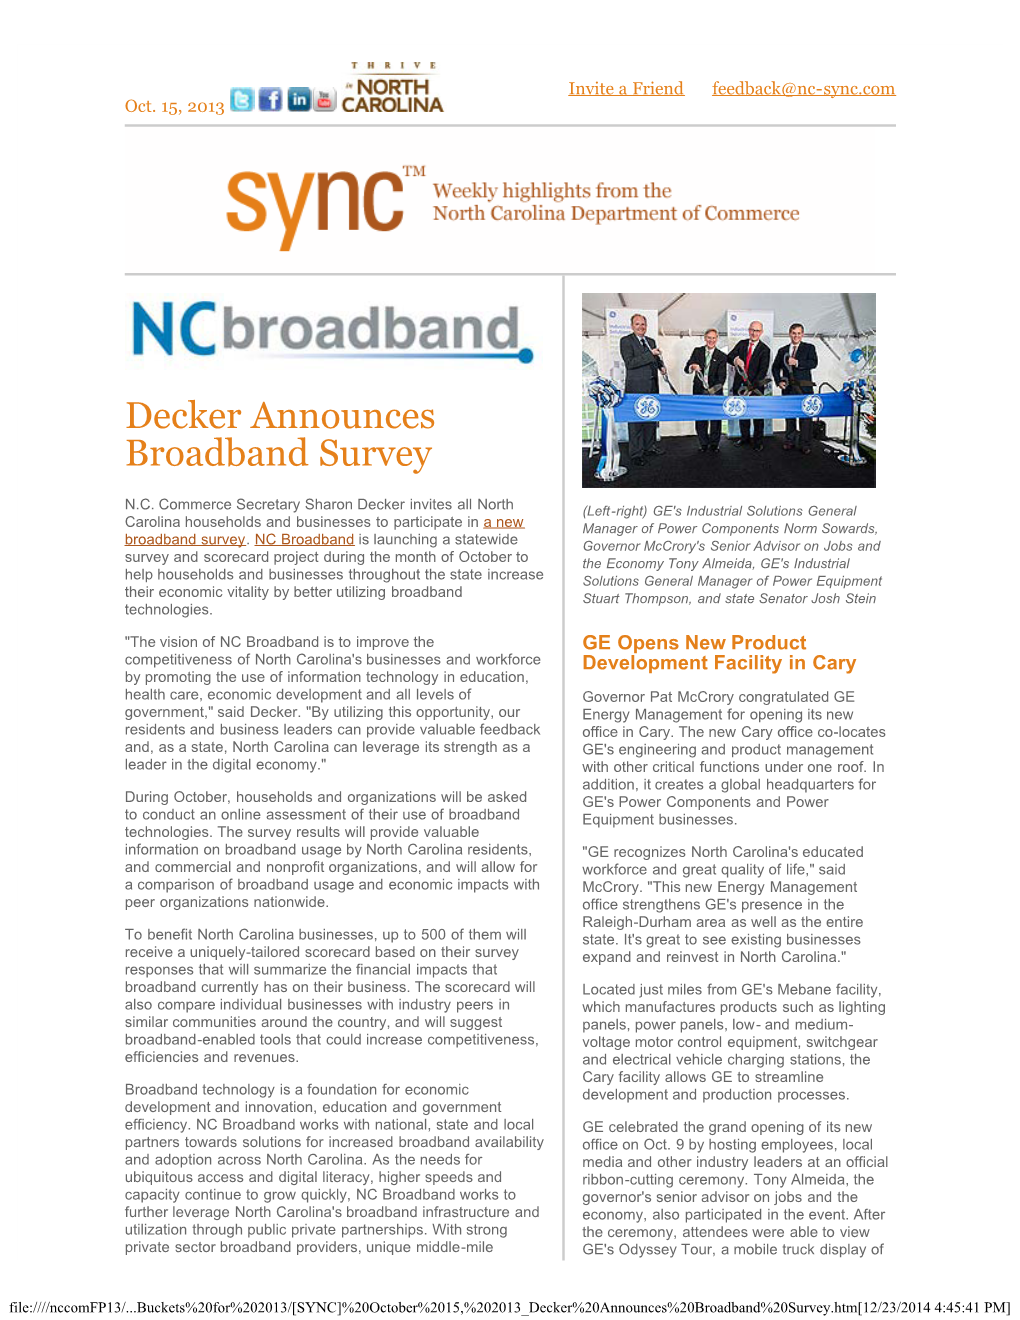 Decker Announces Broadband Survey